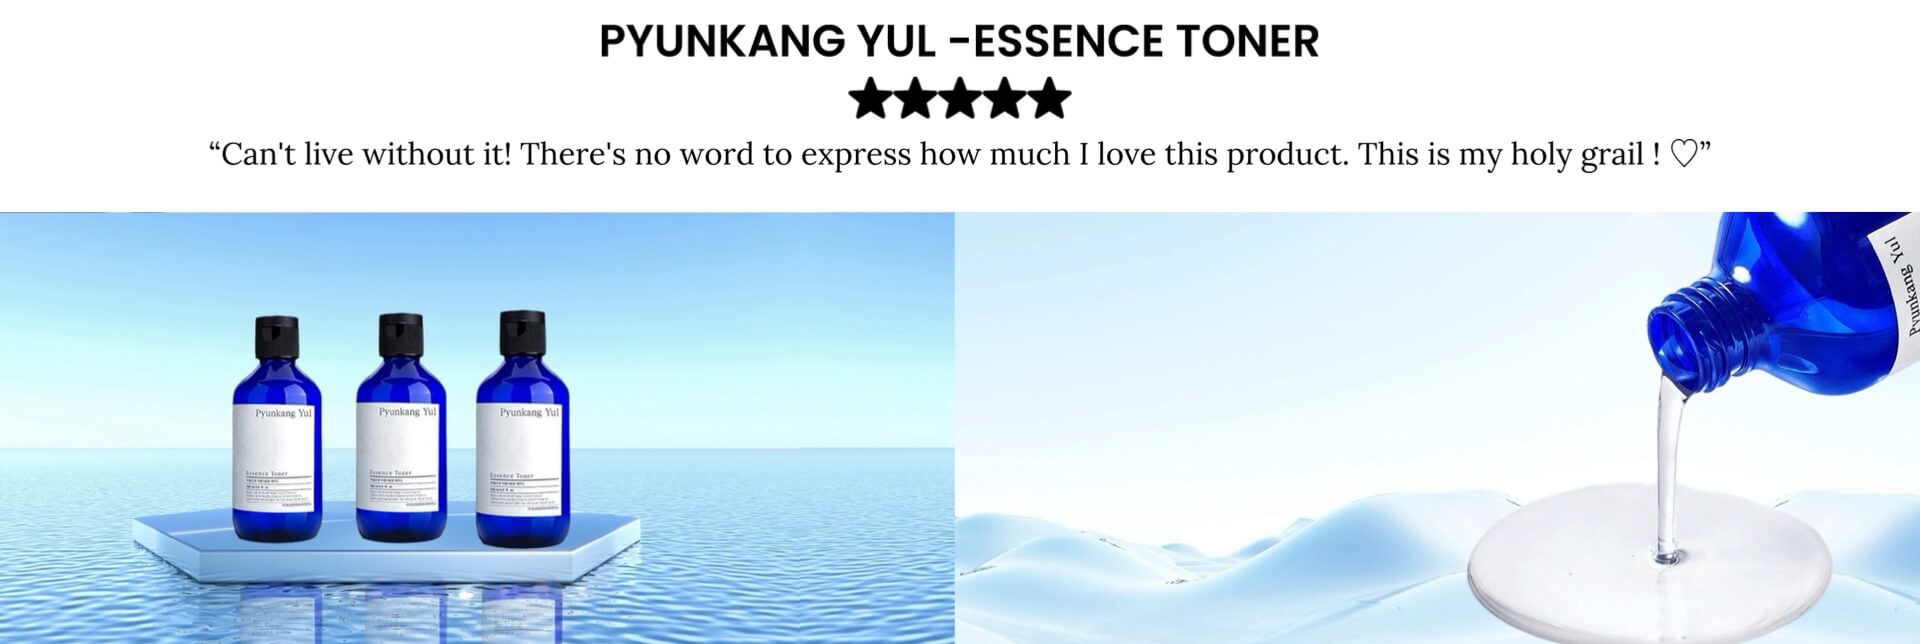 3 bottles of pyunkang yul essence toner floating on blue sea - links to essence toner